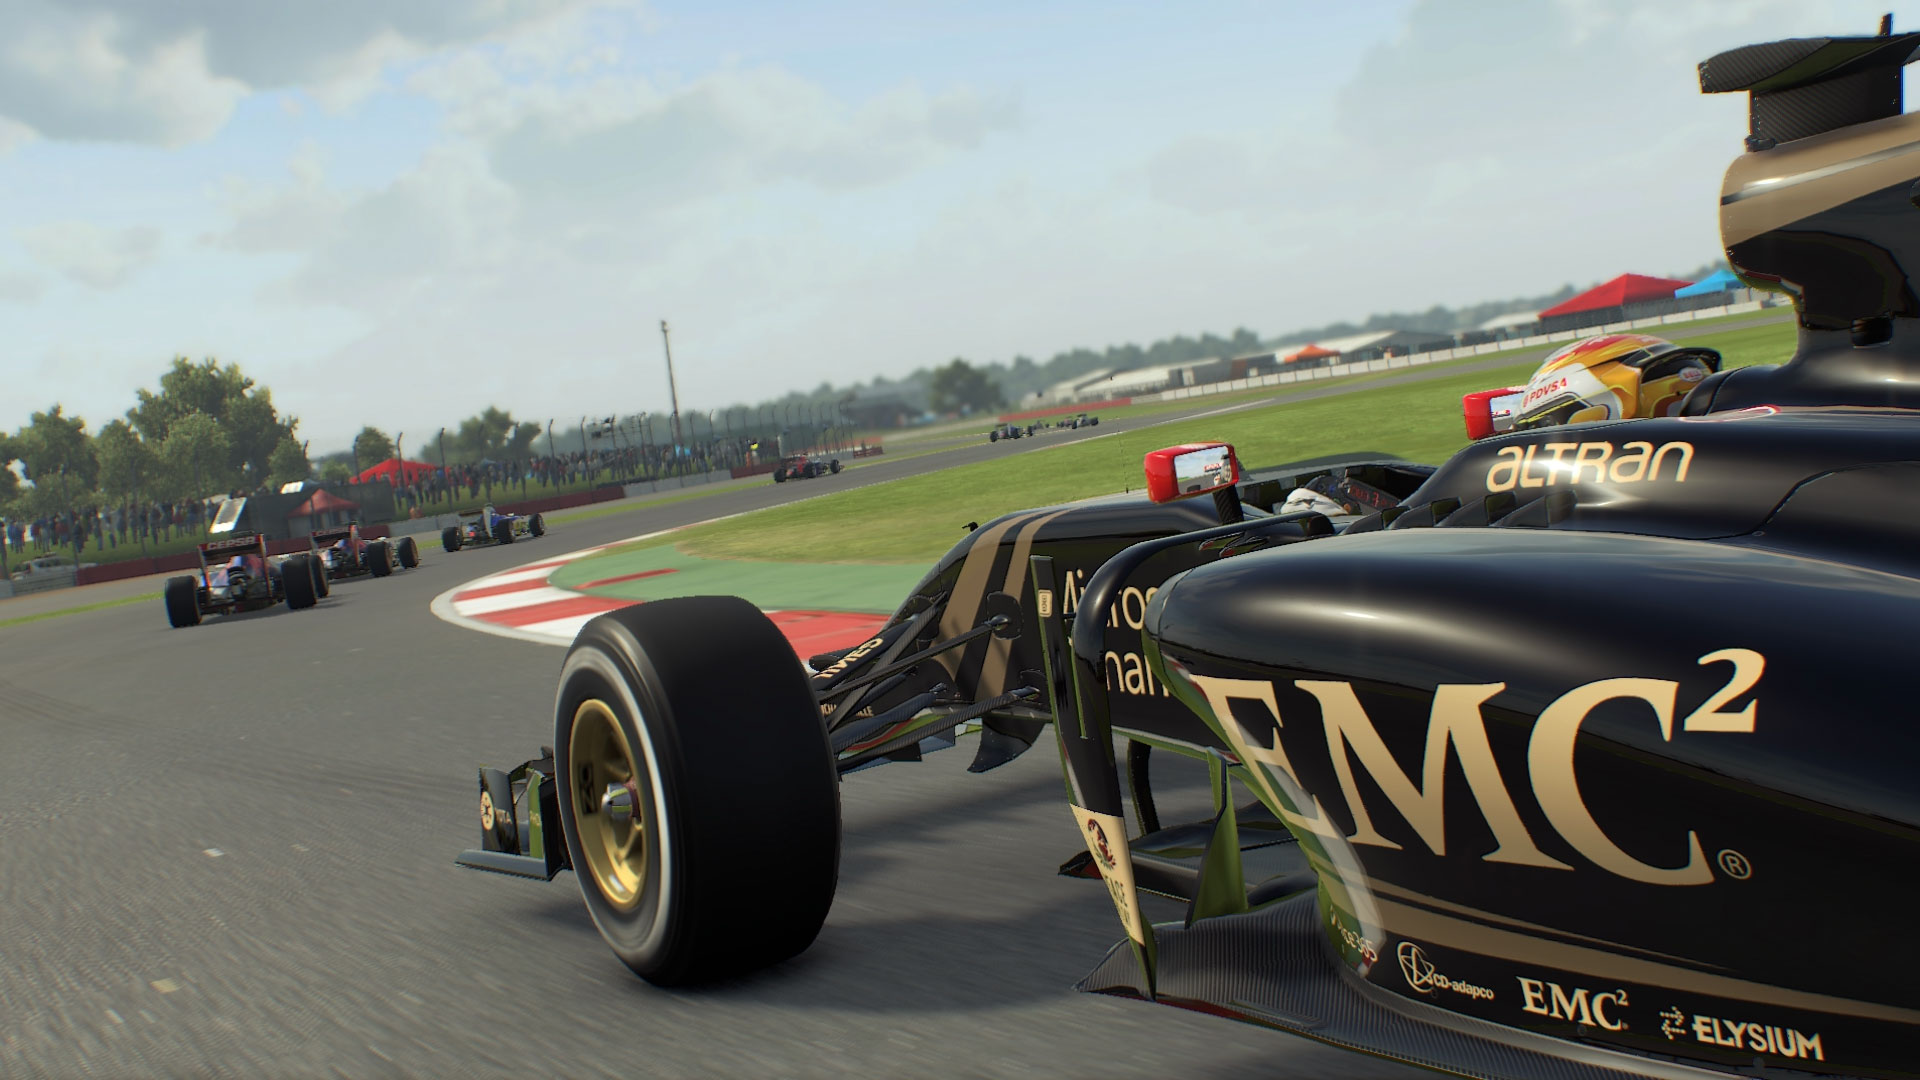 F1 2015 - Download